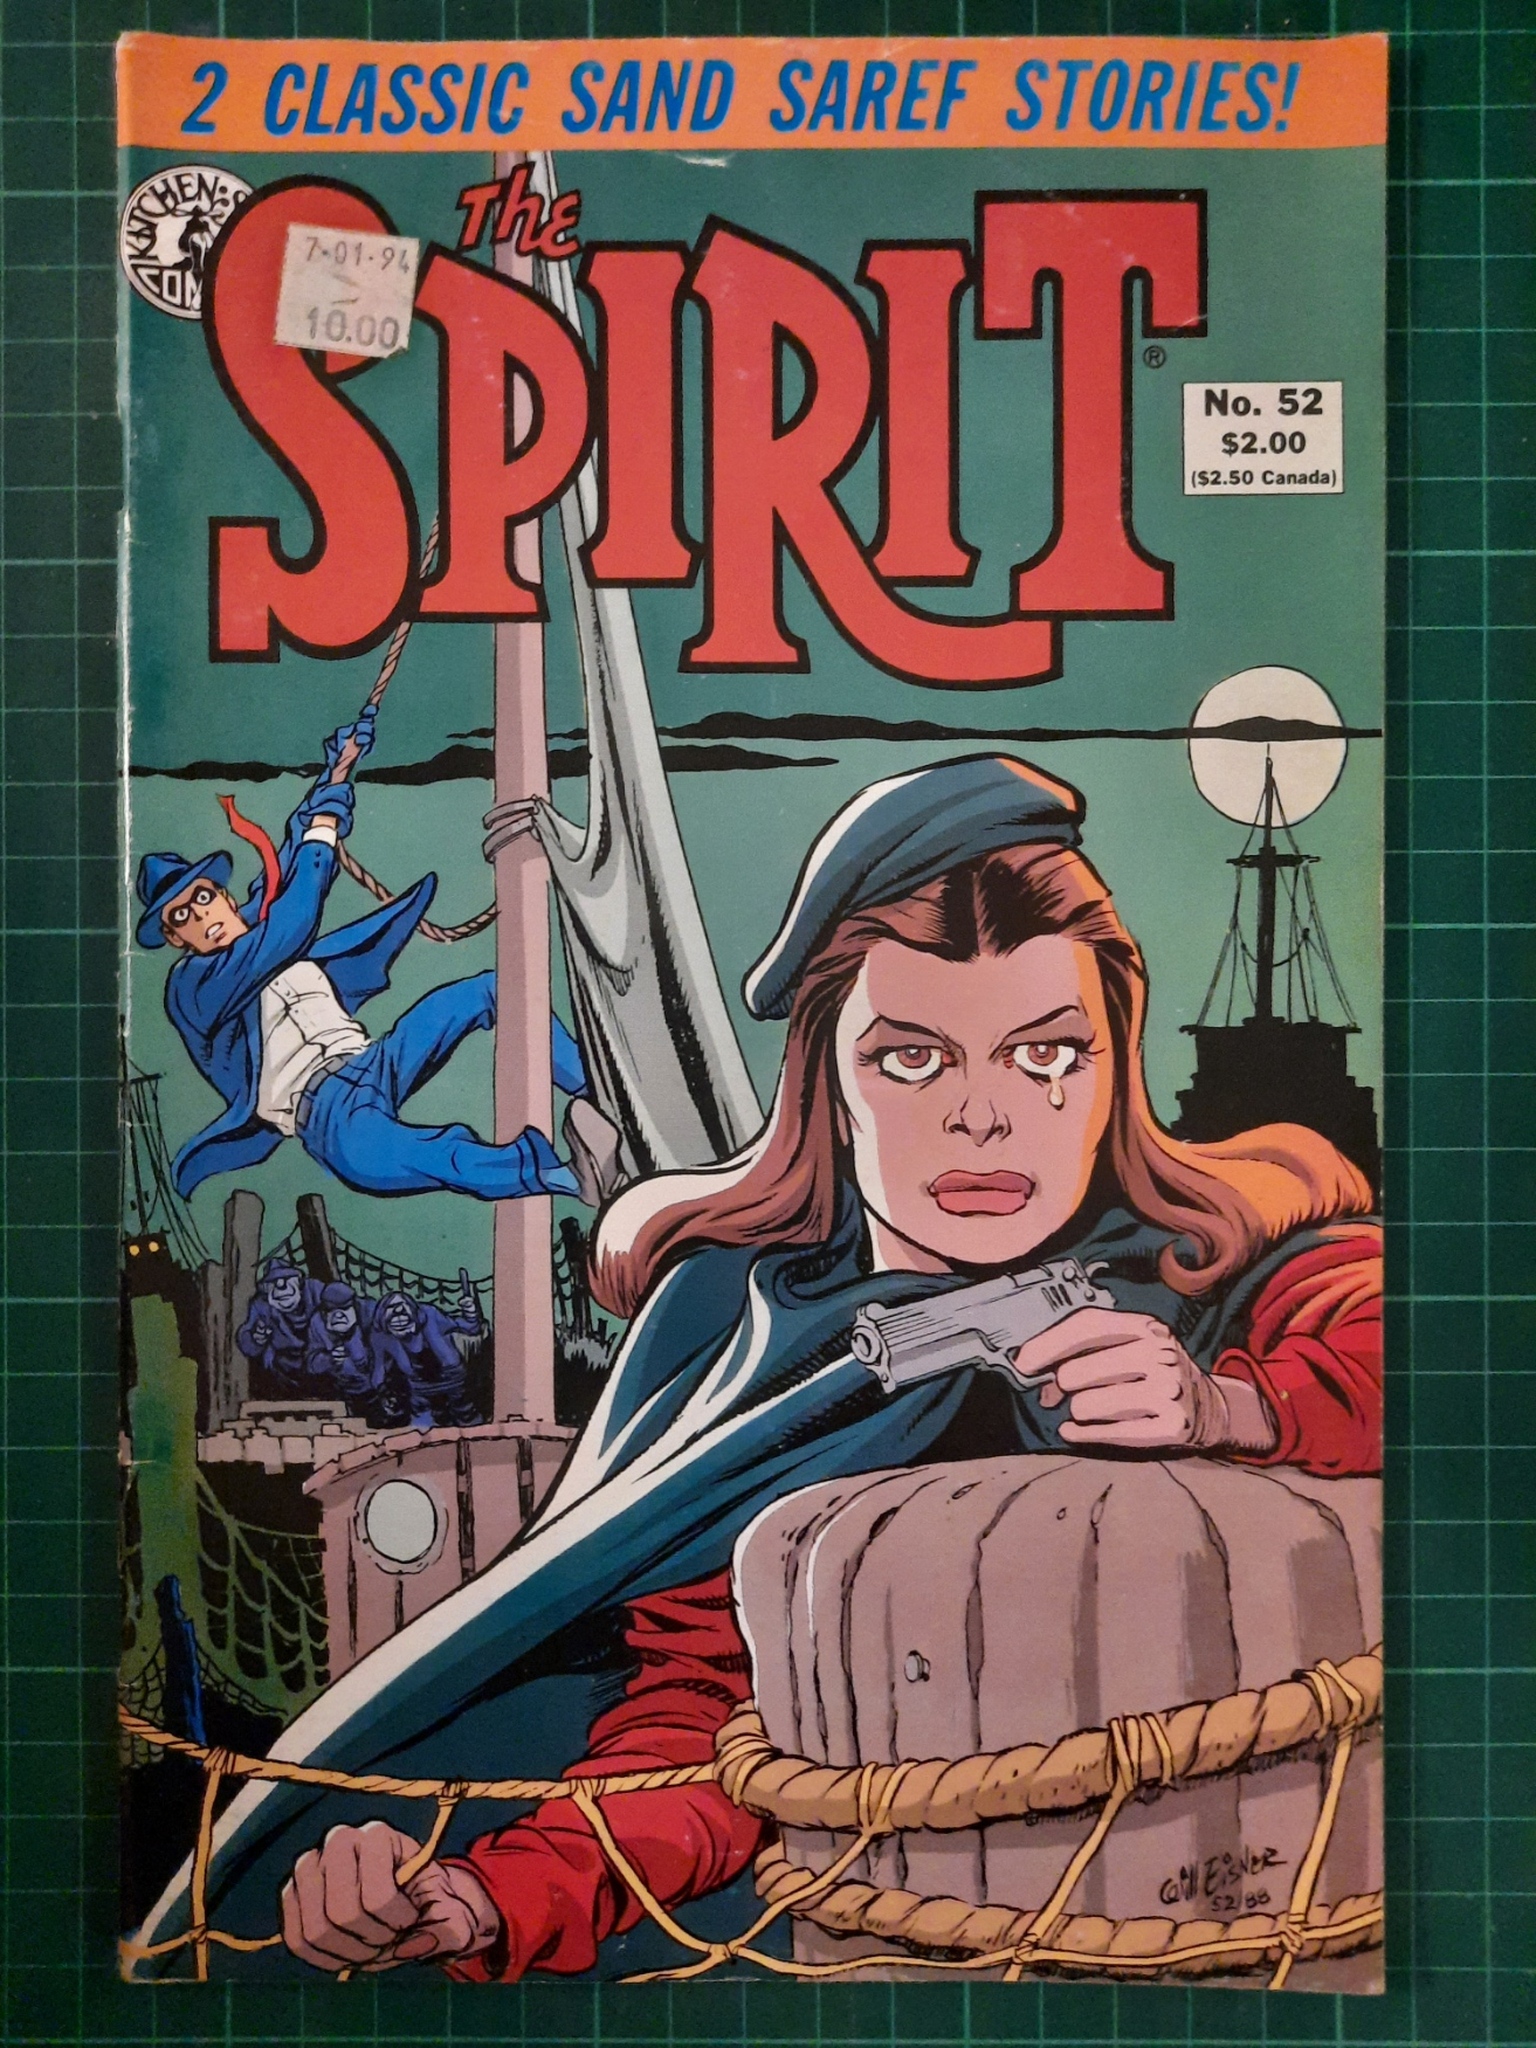 The Spirit #052